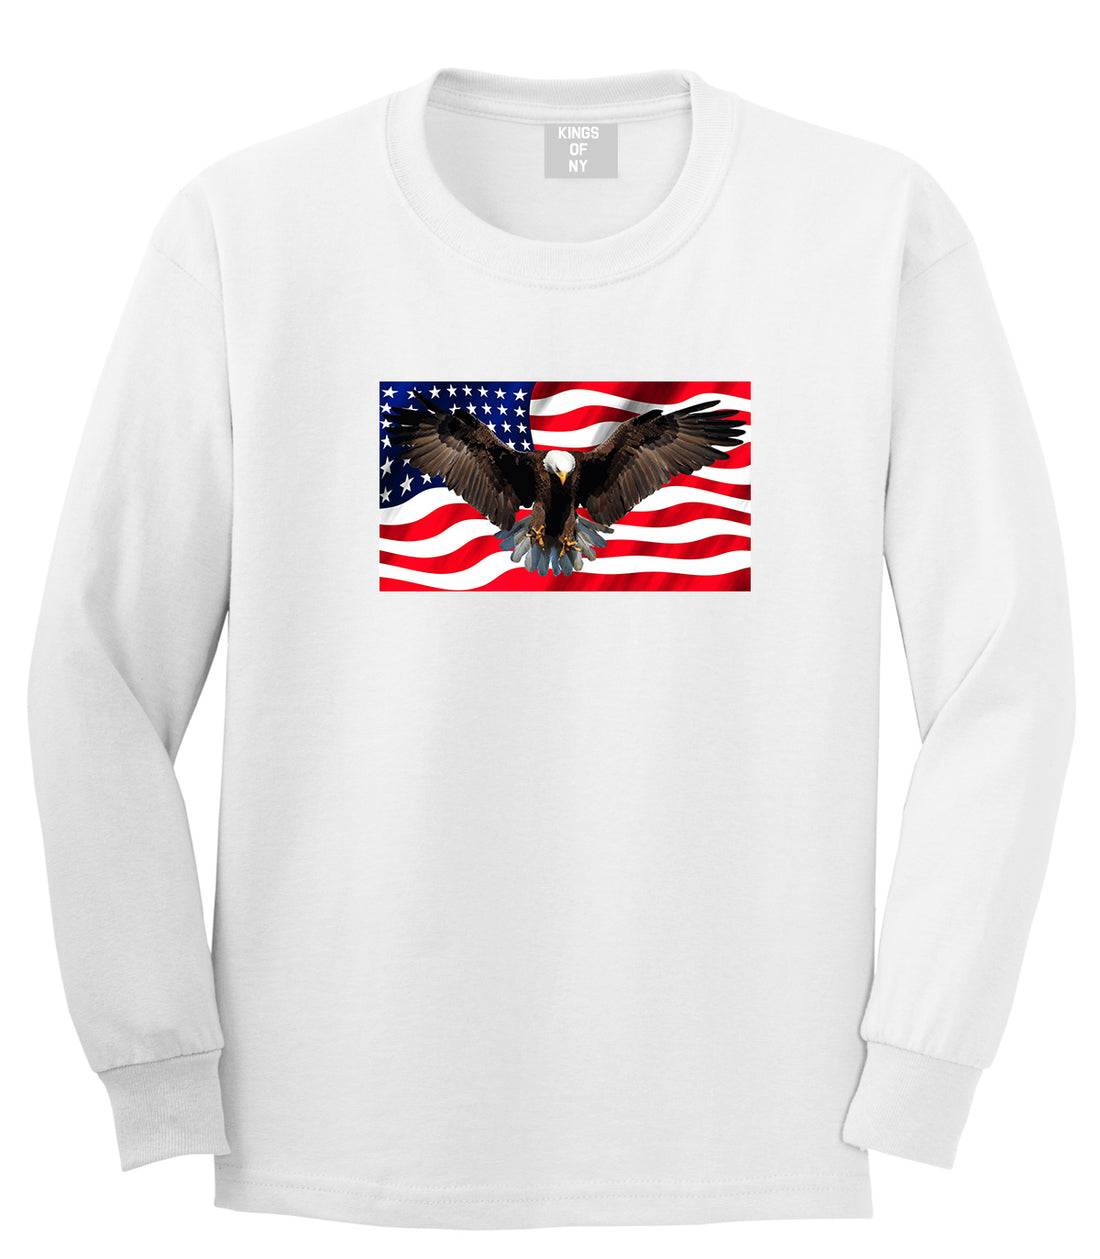 Bald Eagle American Flag White Long Sleeve T-Shirt by Kings Of NY